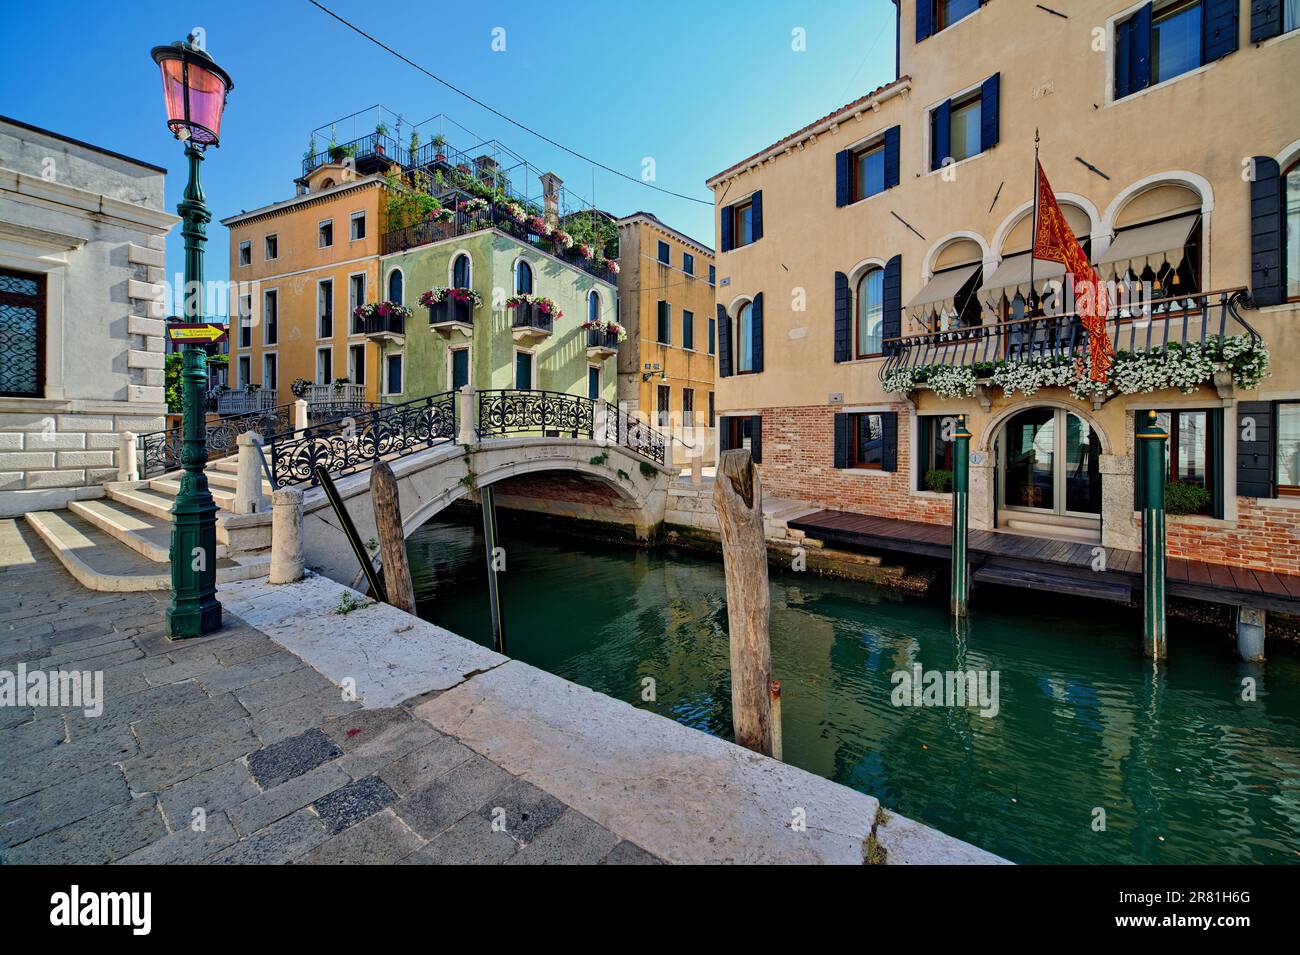 Venice, Veneto - canal, colorful houses Stock Photo